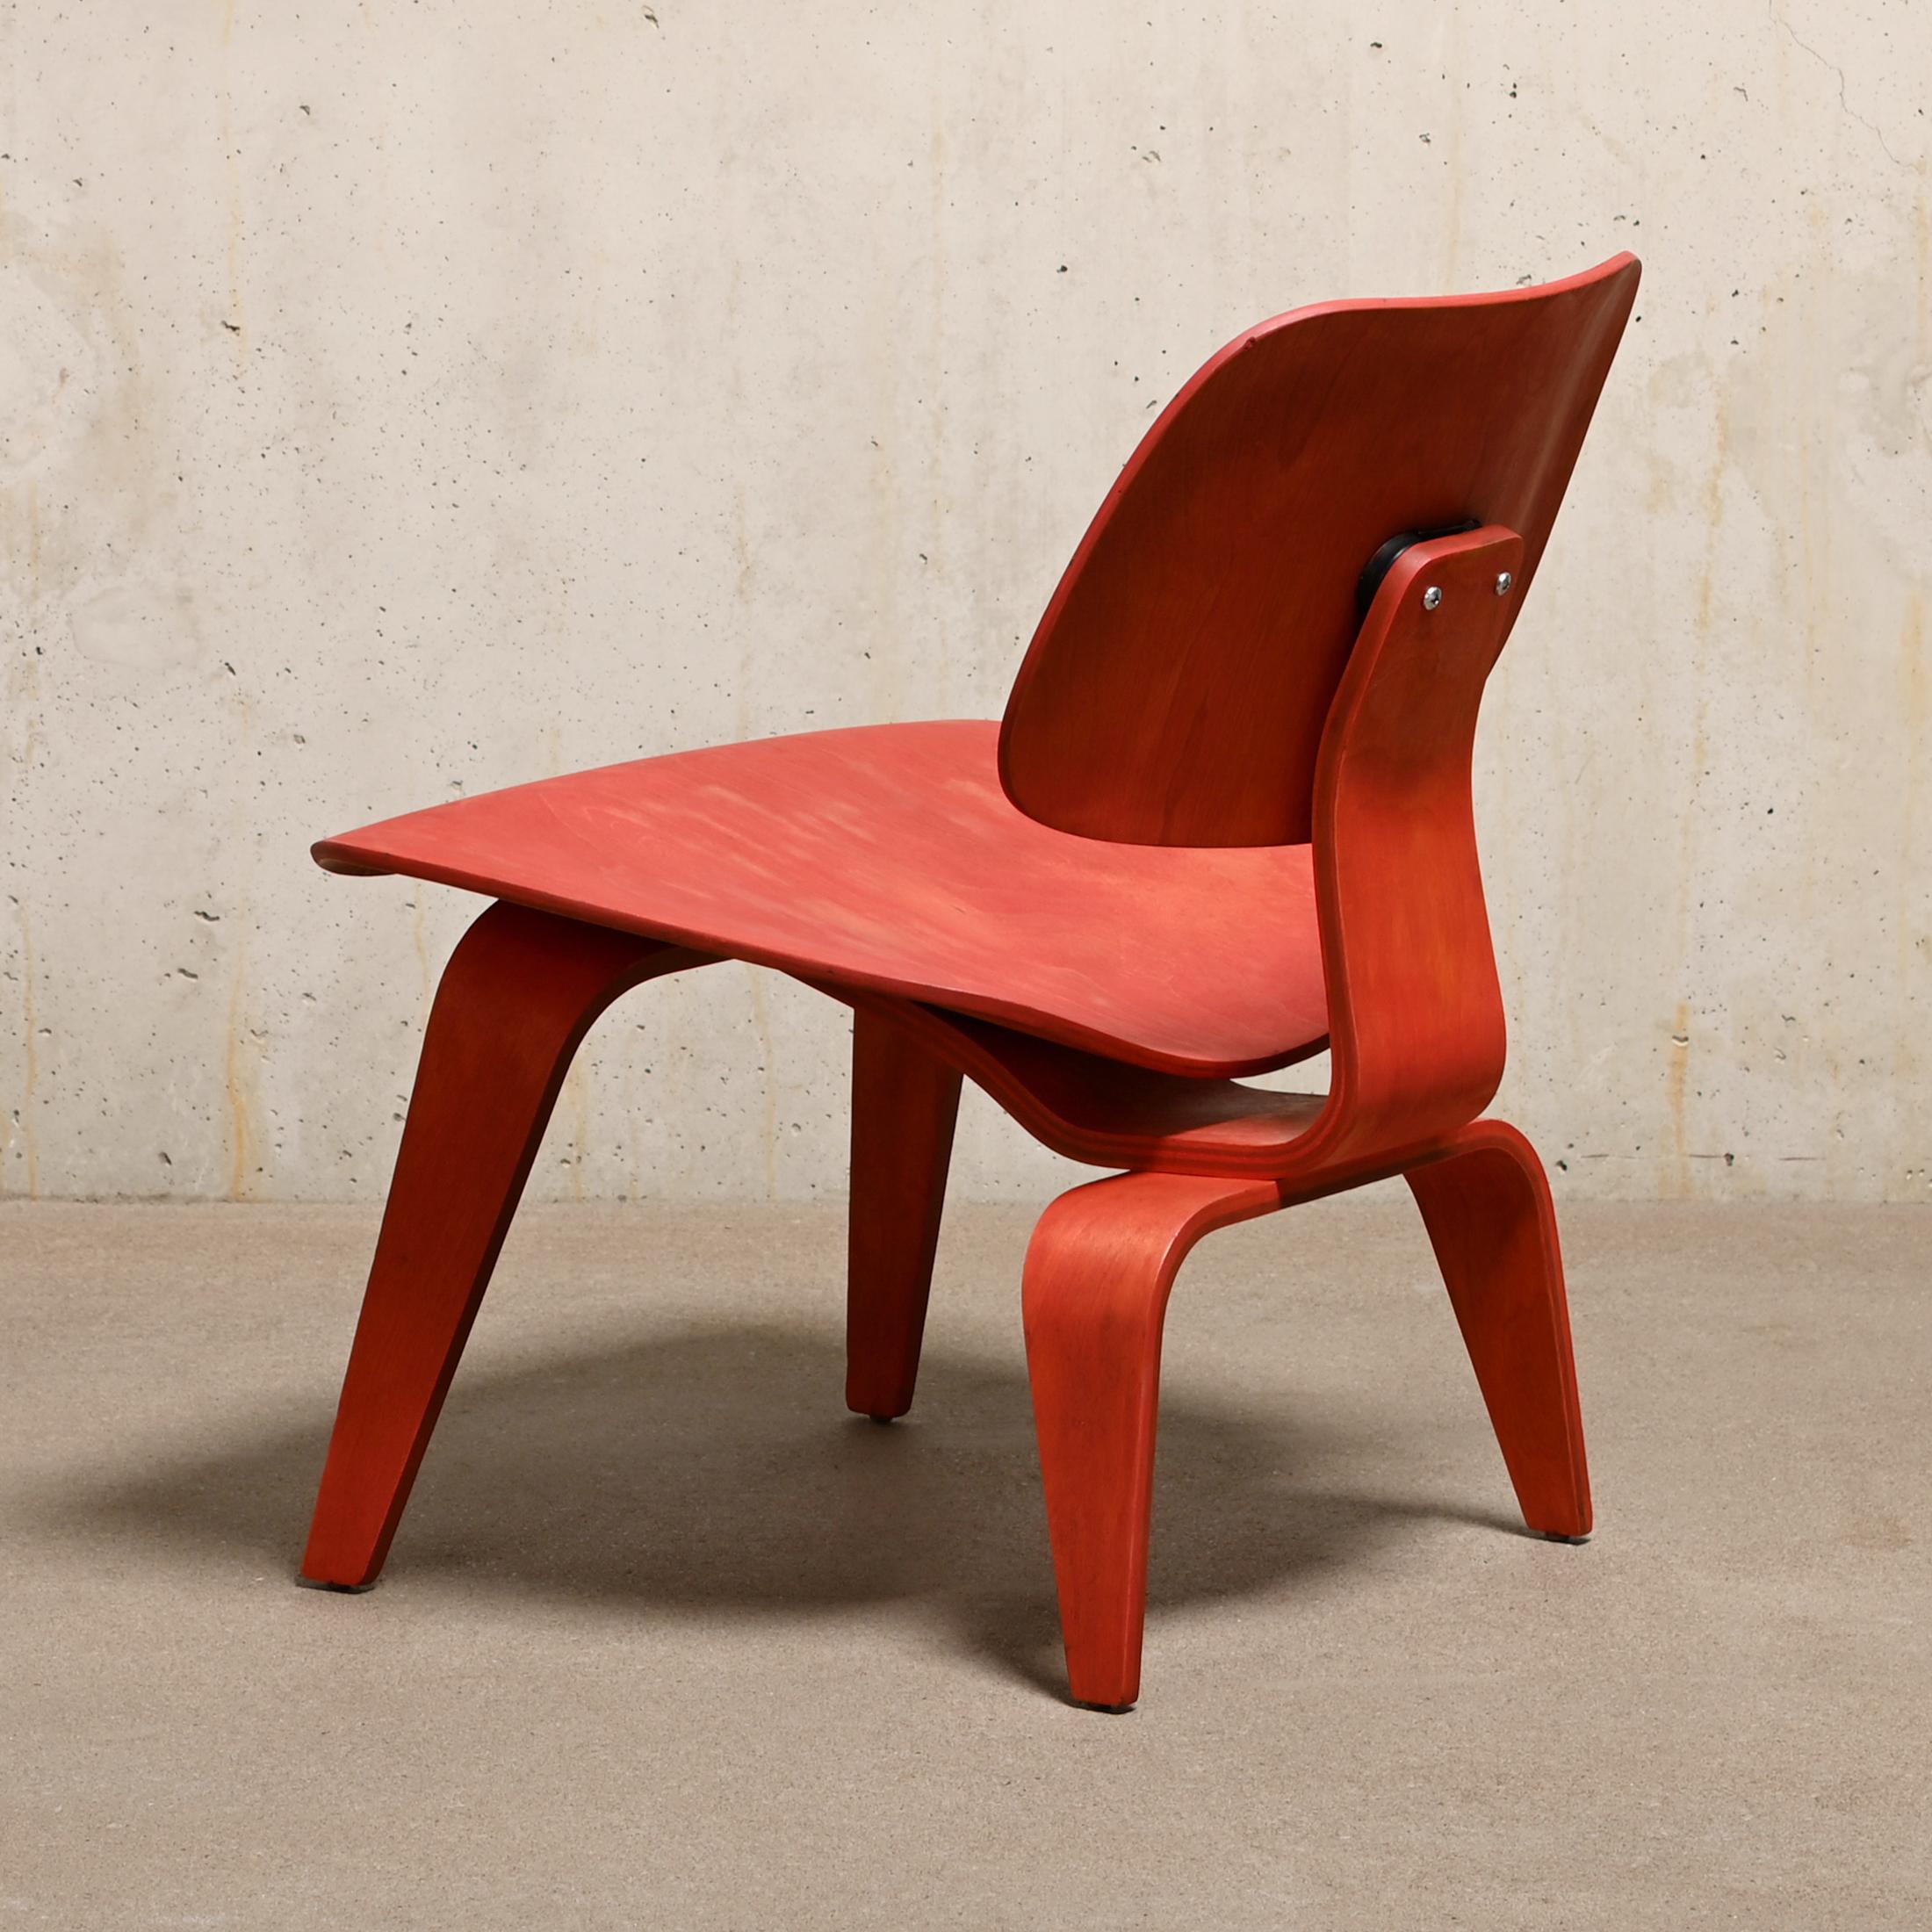 Mid-Century Modern Charles & Ray Eames fauteuil de salon vintage LCW rouge en aniline pour Herman Miller